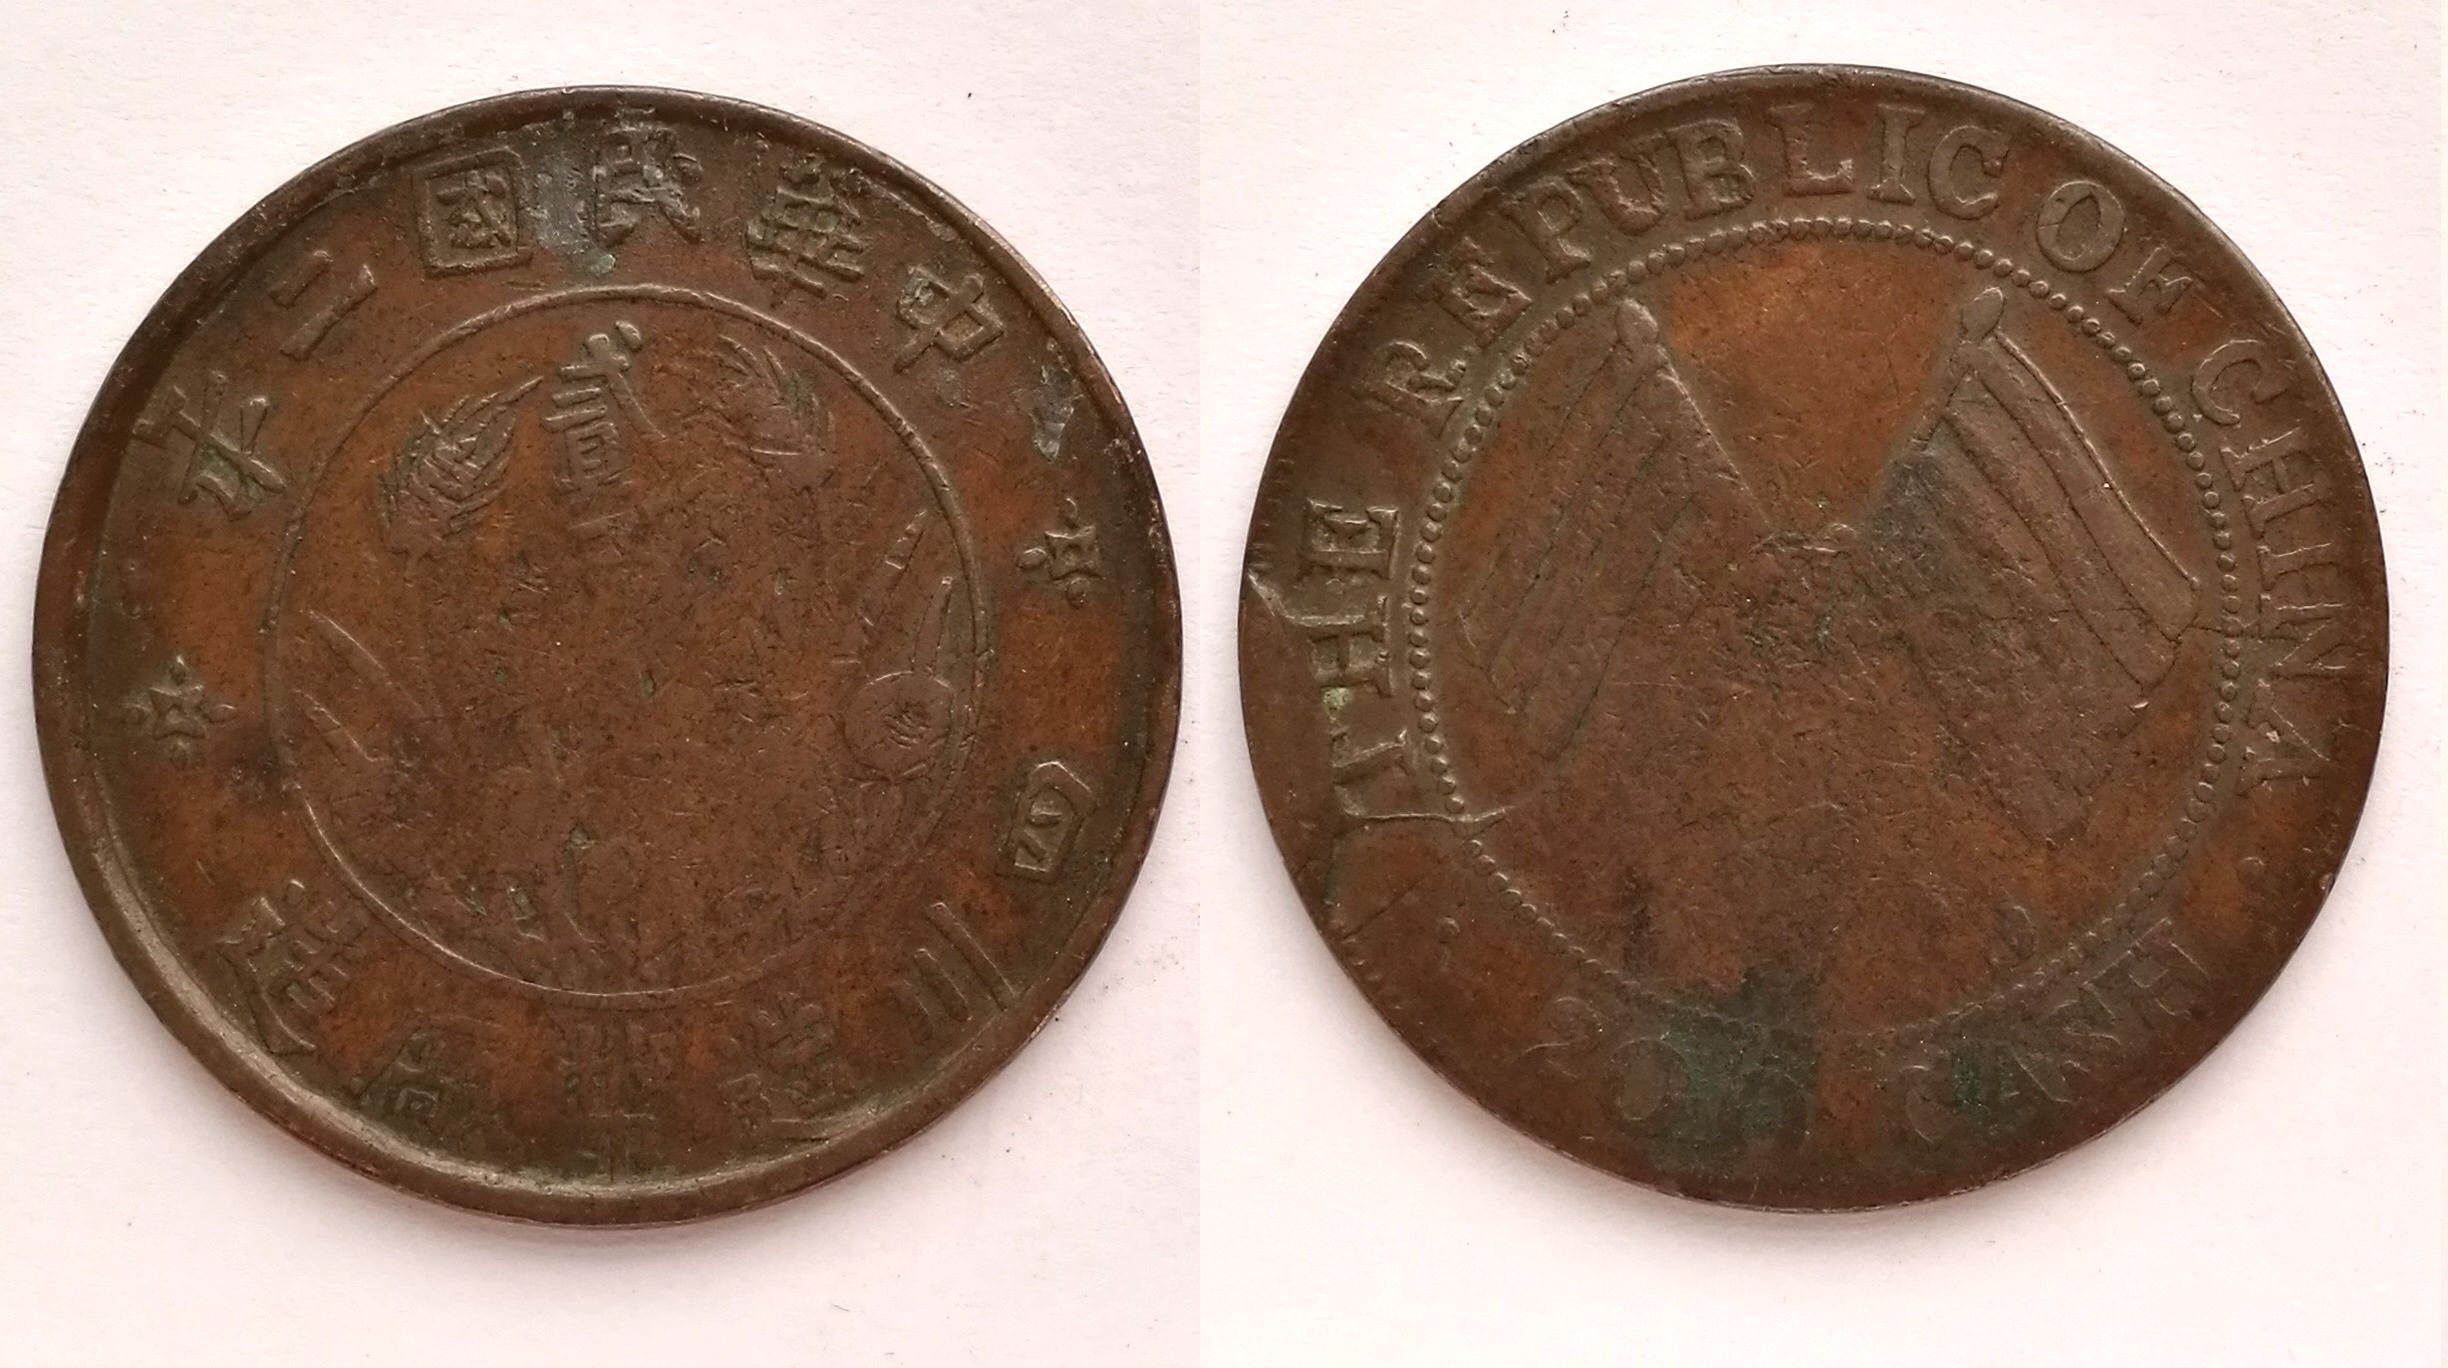 K5258, Szechuan (Si-Chuan) Province 200 Cash Coin, China 1912